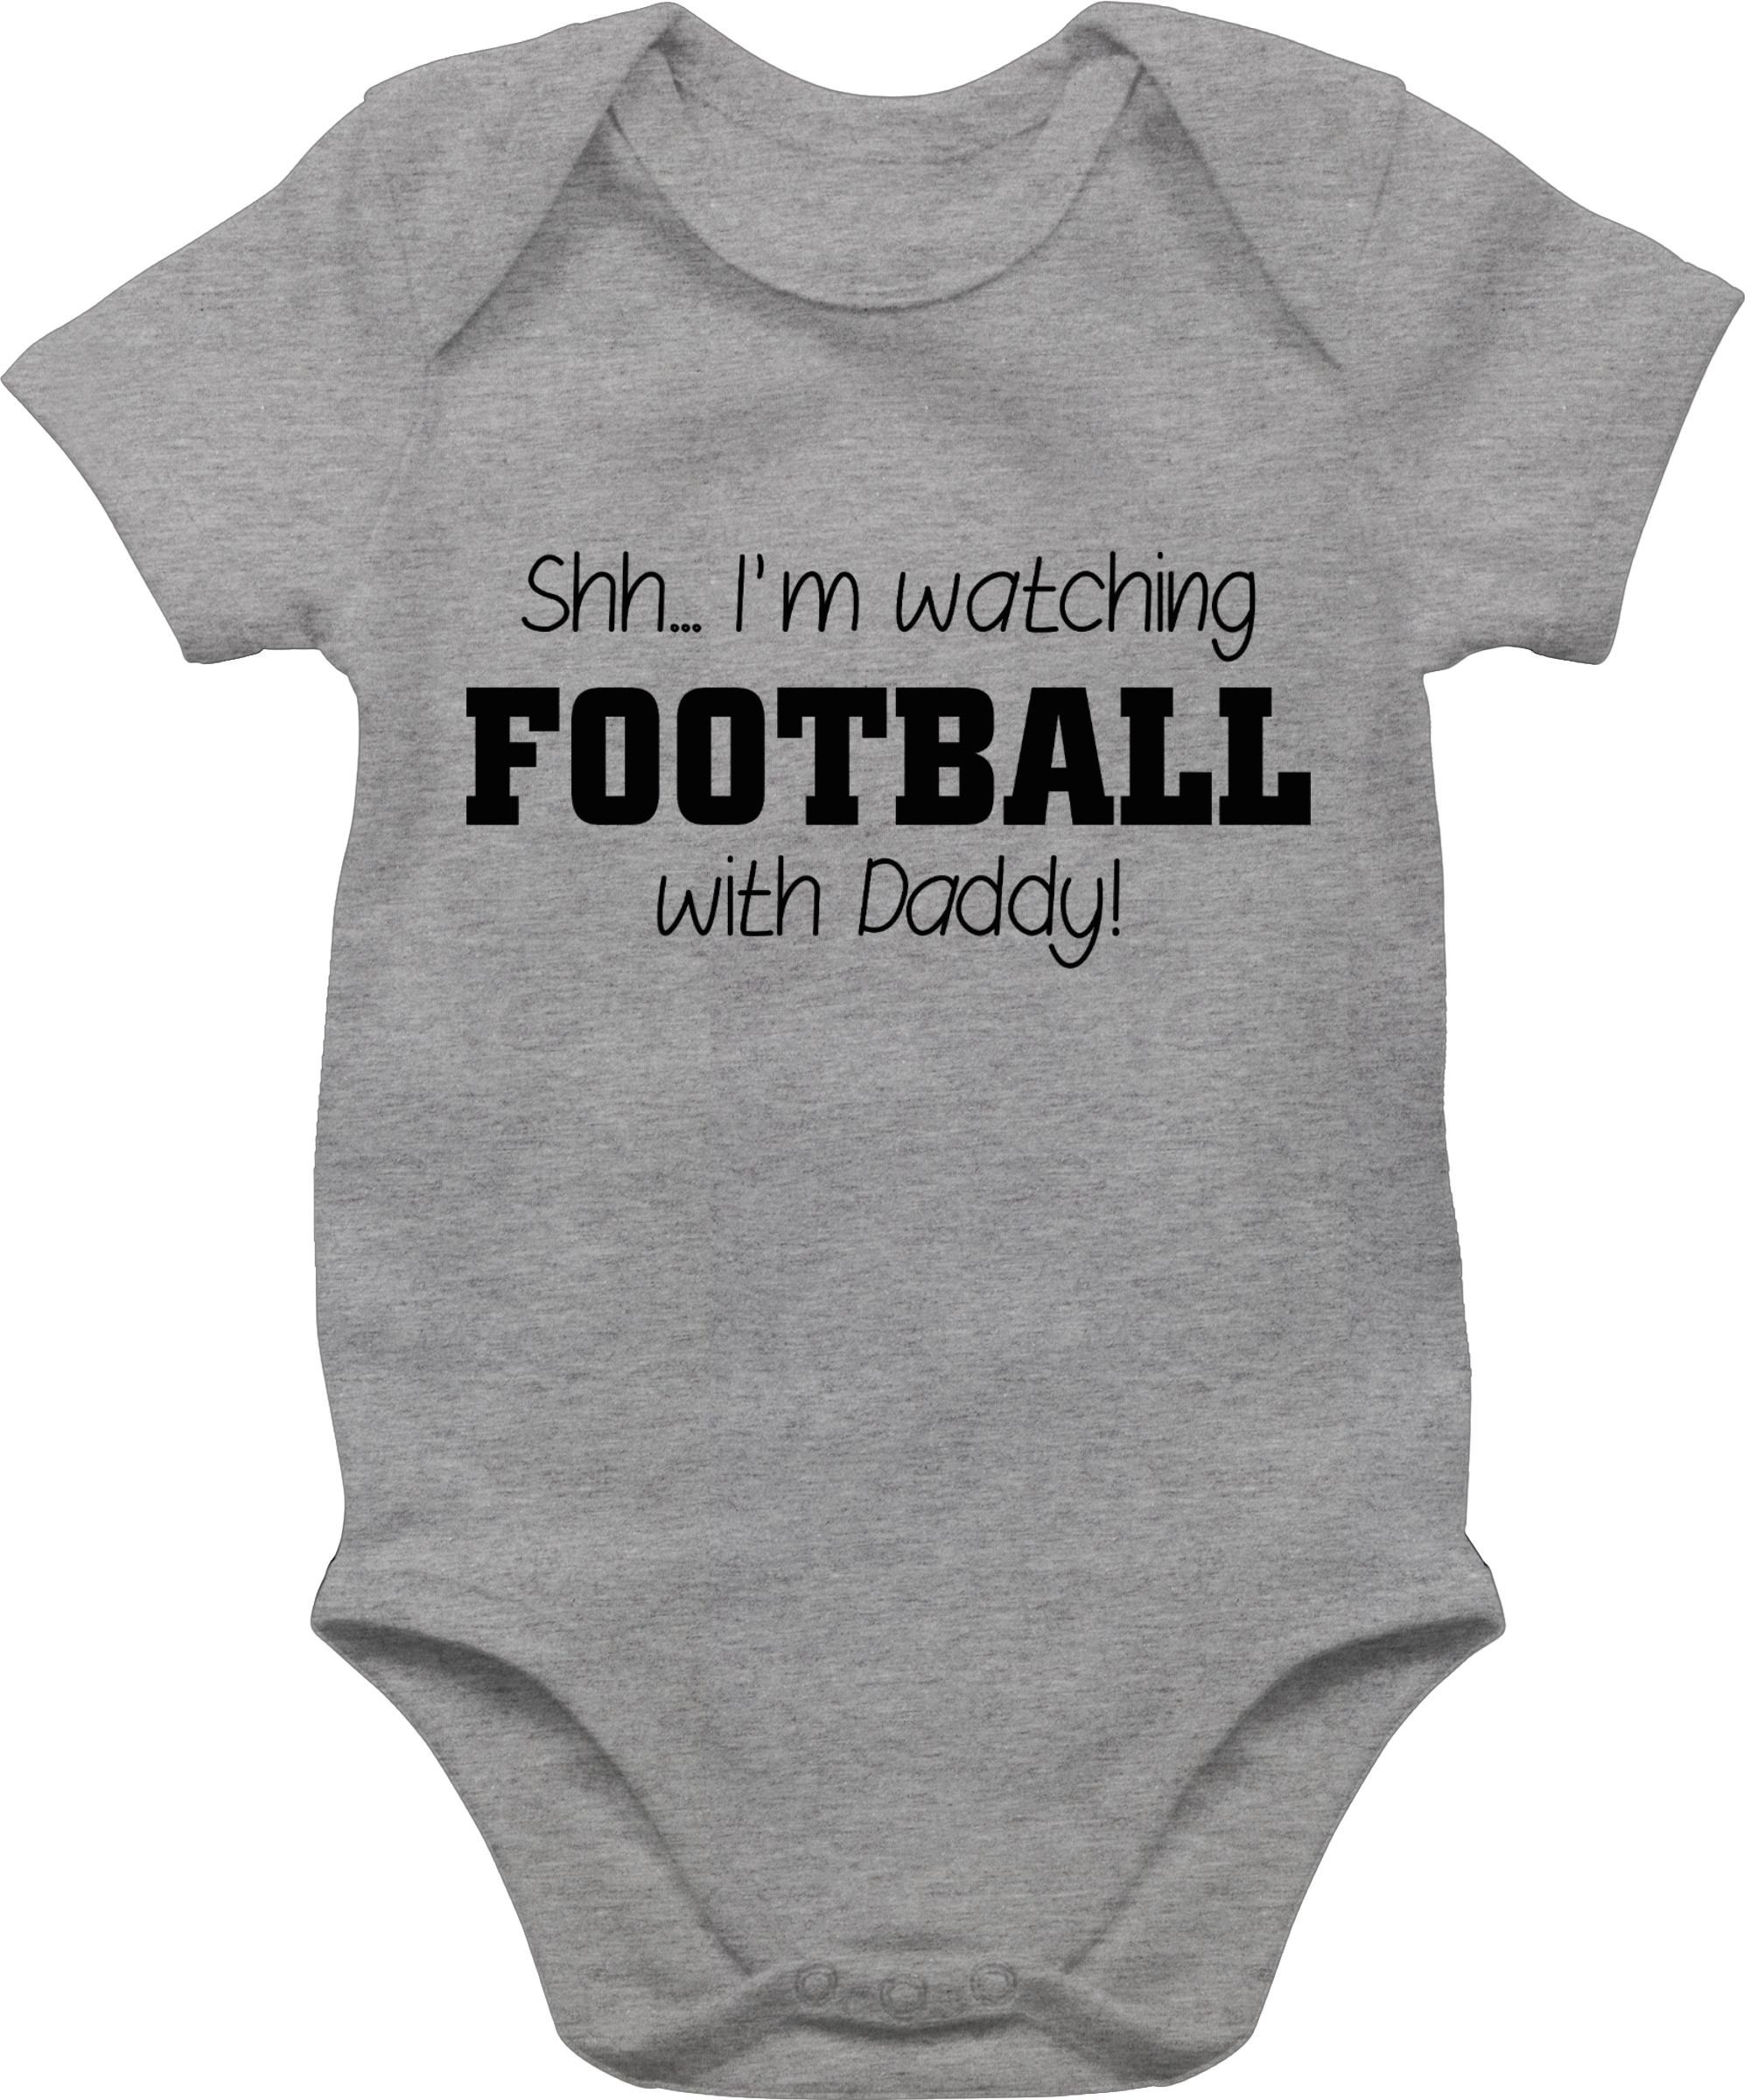 Shirtracer Shirtbody Shh...I'm Sport meliert football Bewegung Grau - watching 1 Baby & with Daddy! schwarz